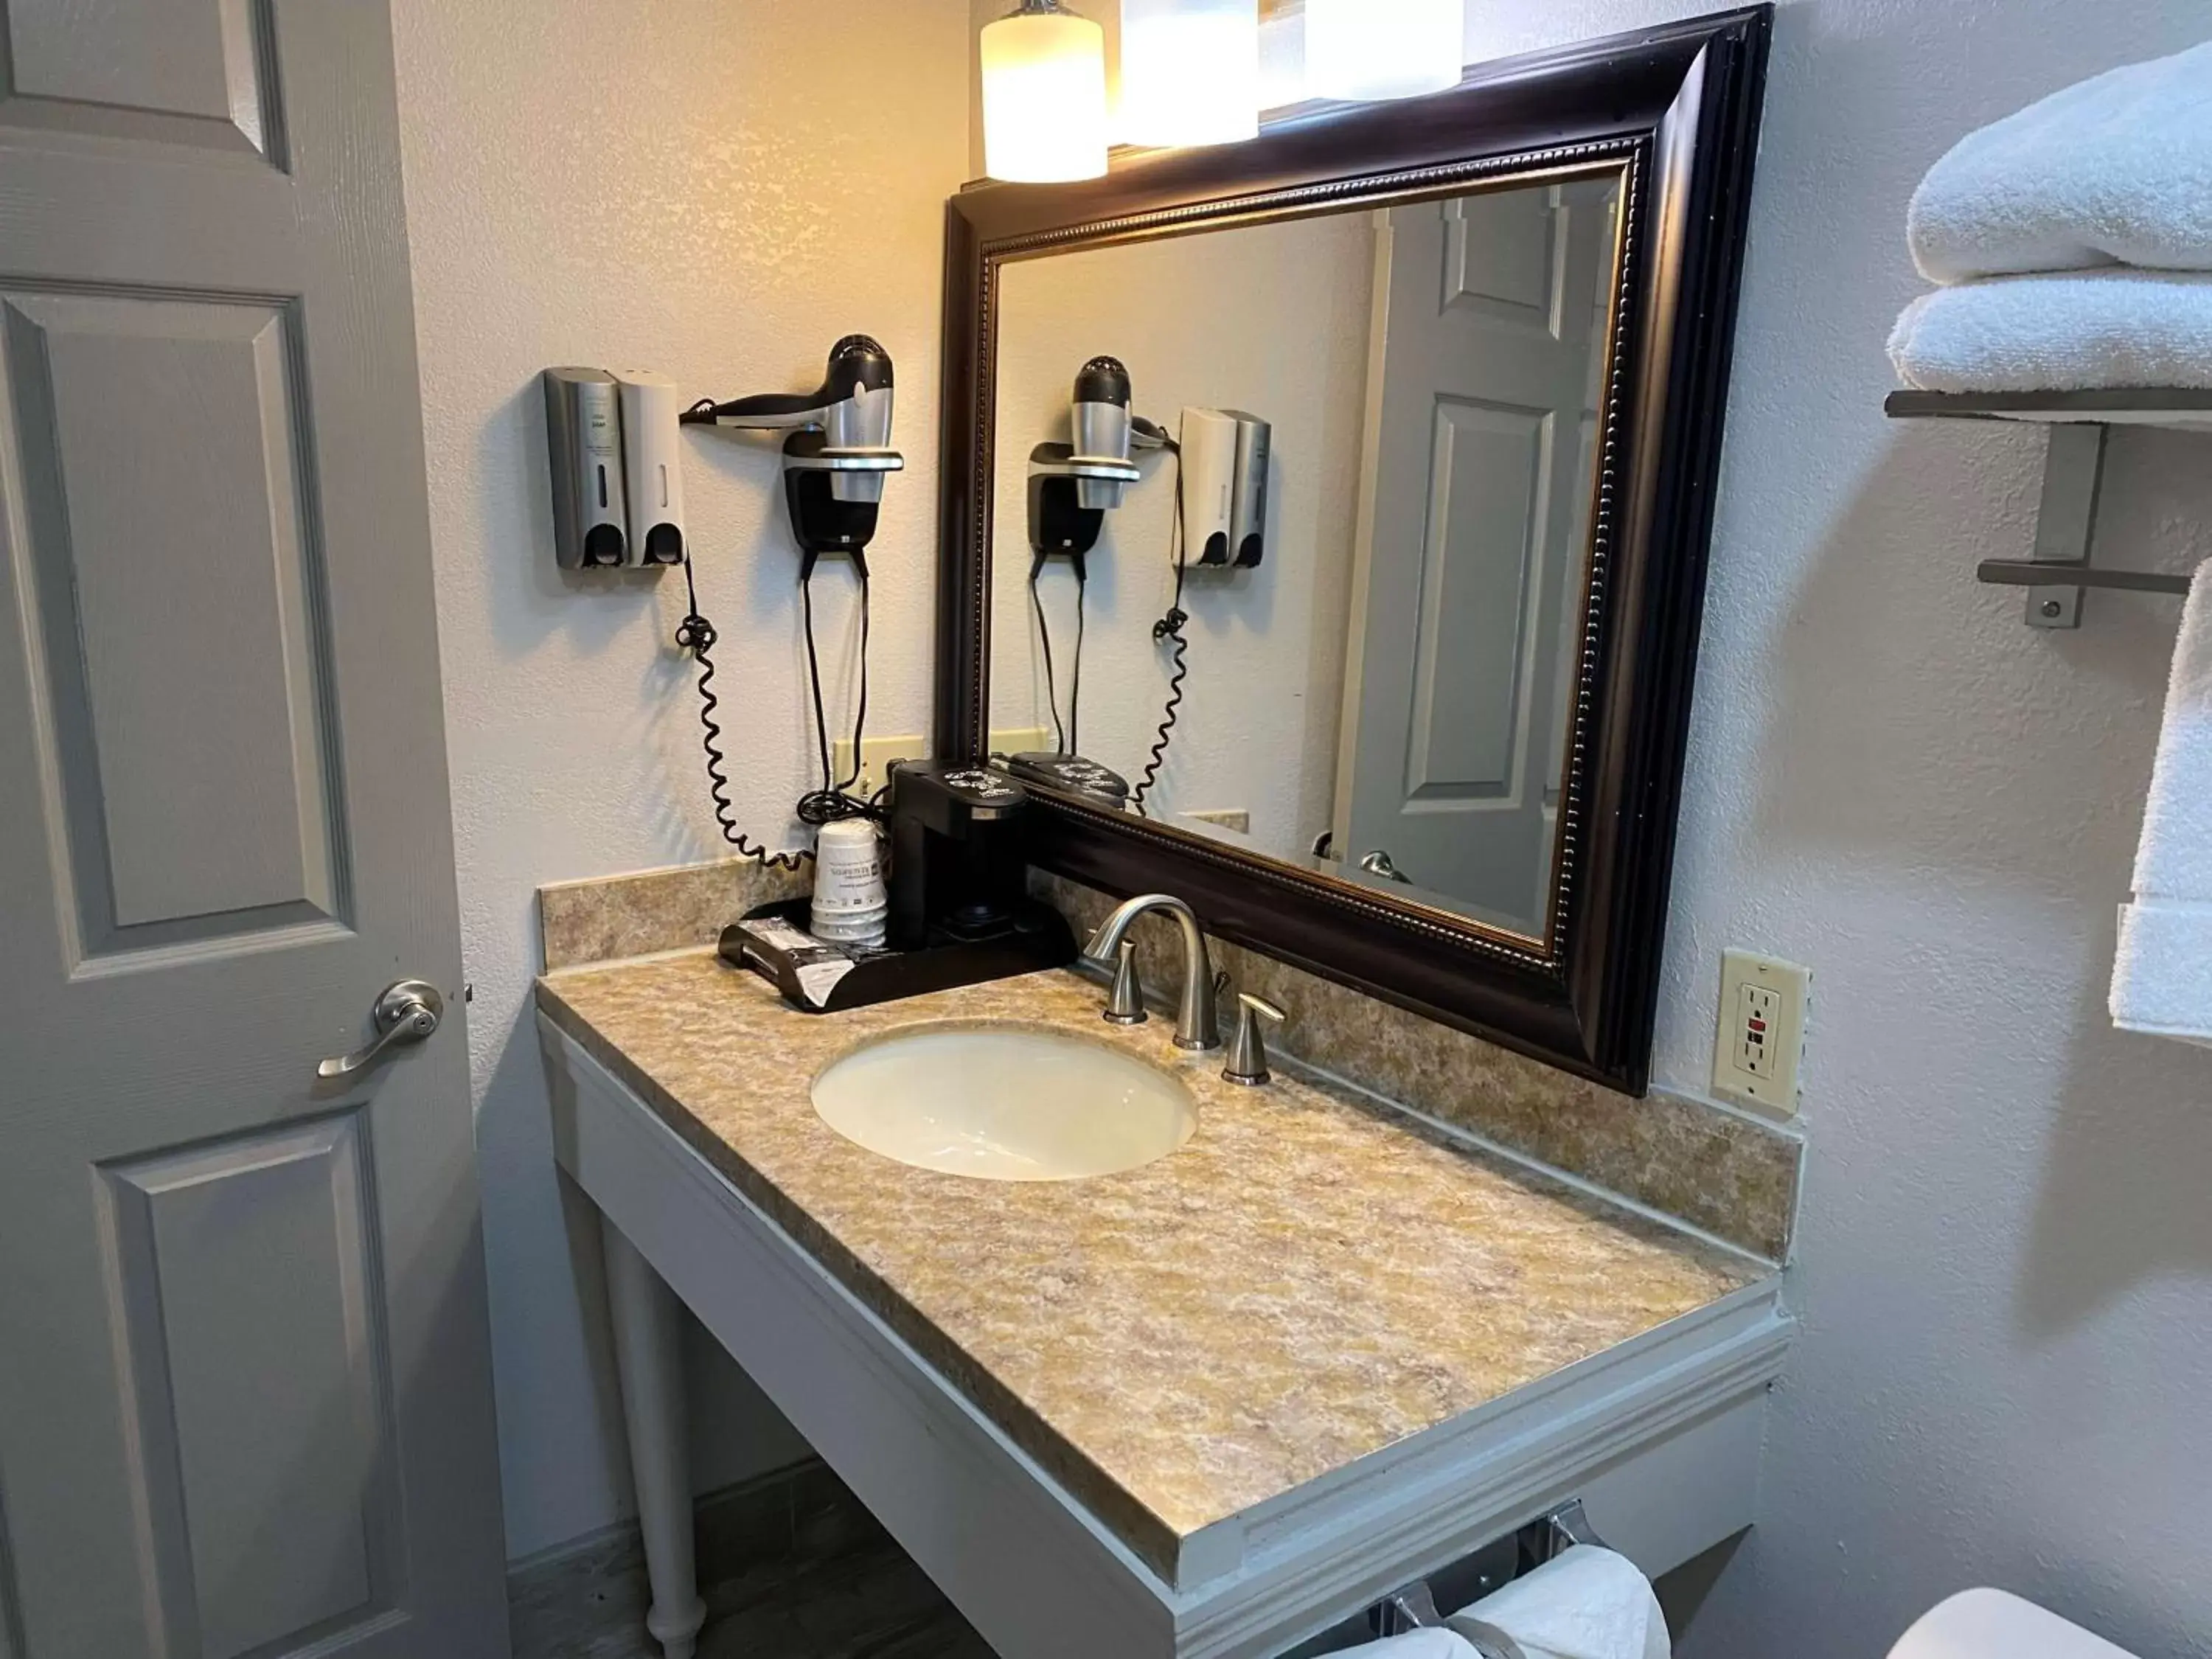 Photo of the whole room, Bathroom in Best Western Allatoona Inn & Suites